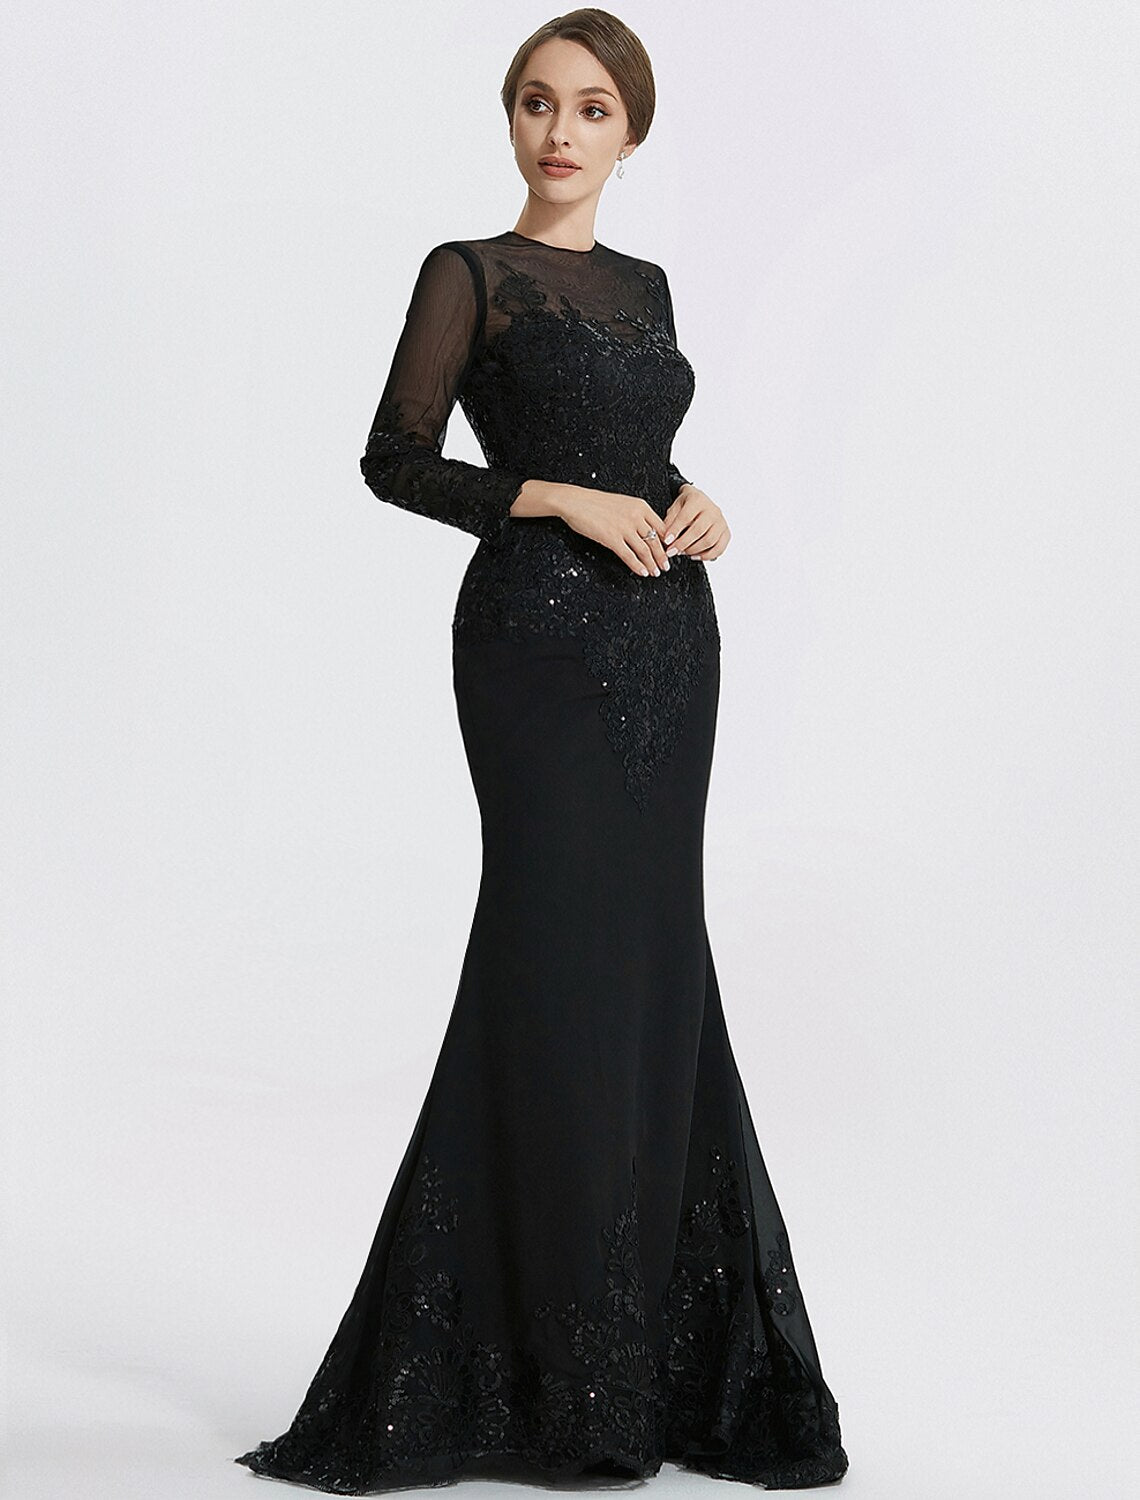 Mermaid / Trumpet Sheath / Column Evening Gown Elegant Dress Formal Floor Length Long Sleeve Jewel Neck Lace with Appliques